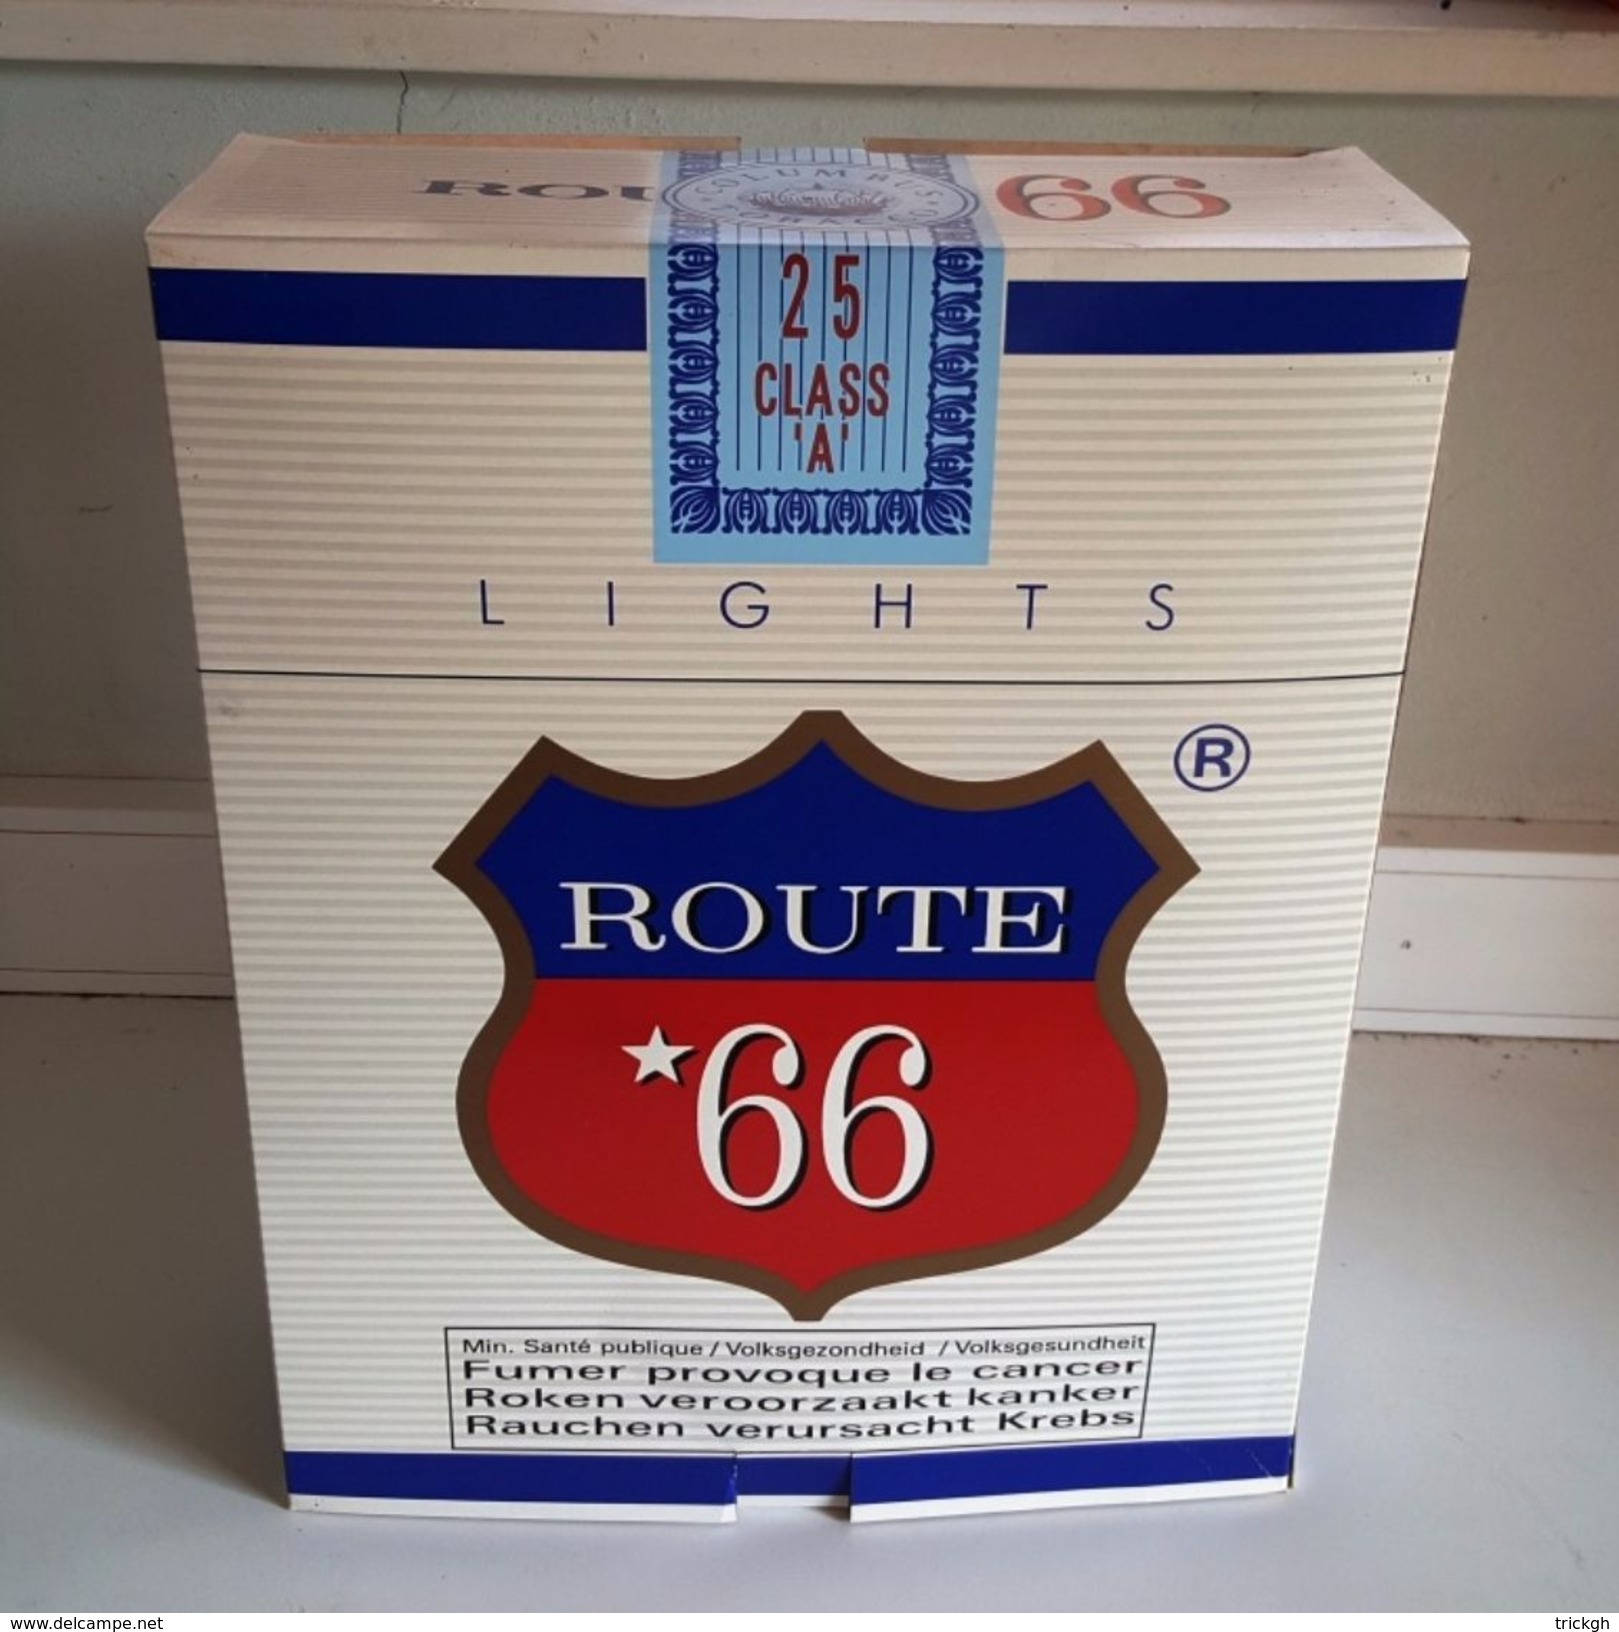 Grote Publidoos Sigaretten Route 66 - Advertising Items